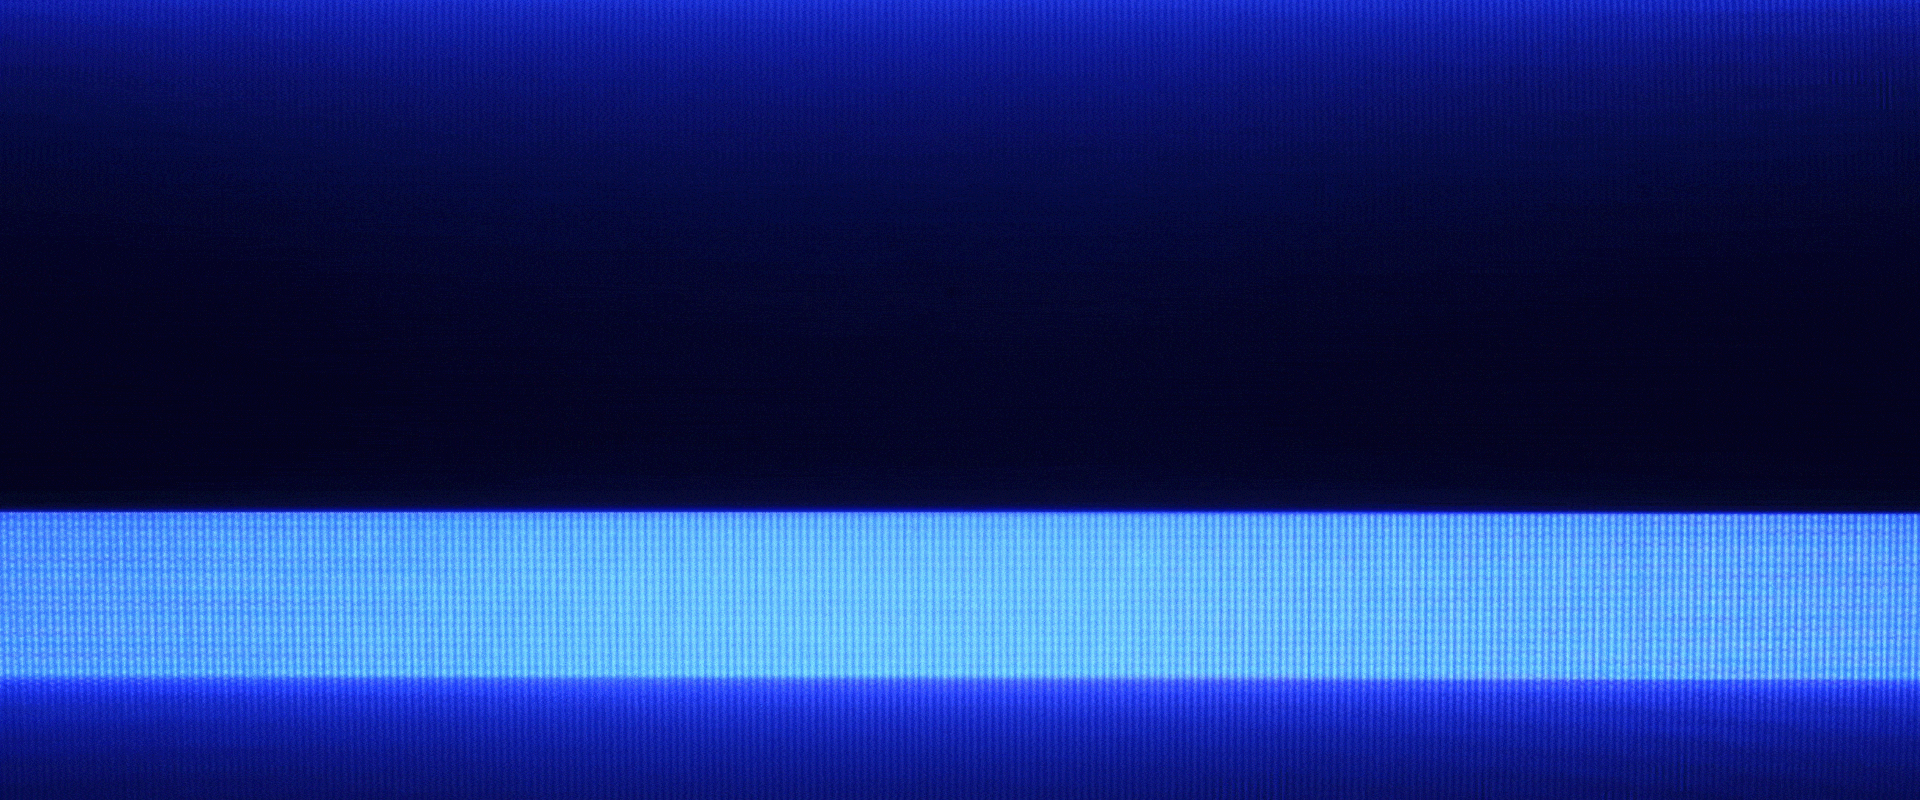 ChrisMarkwardt.com Main Image, Abstract digital blue light scan line on a dark gradient background, representing modern technology and creative digital art